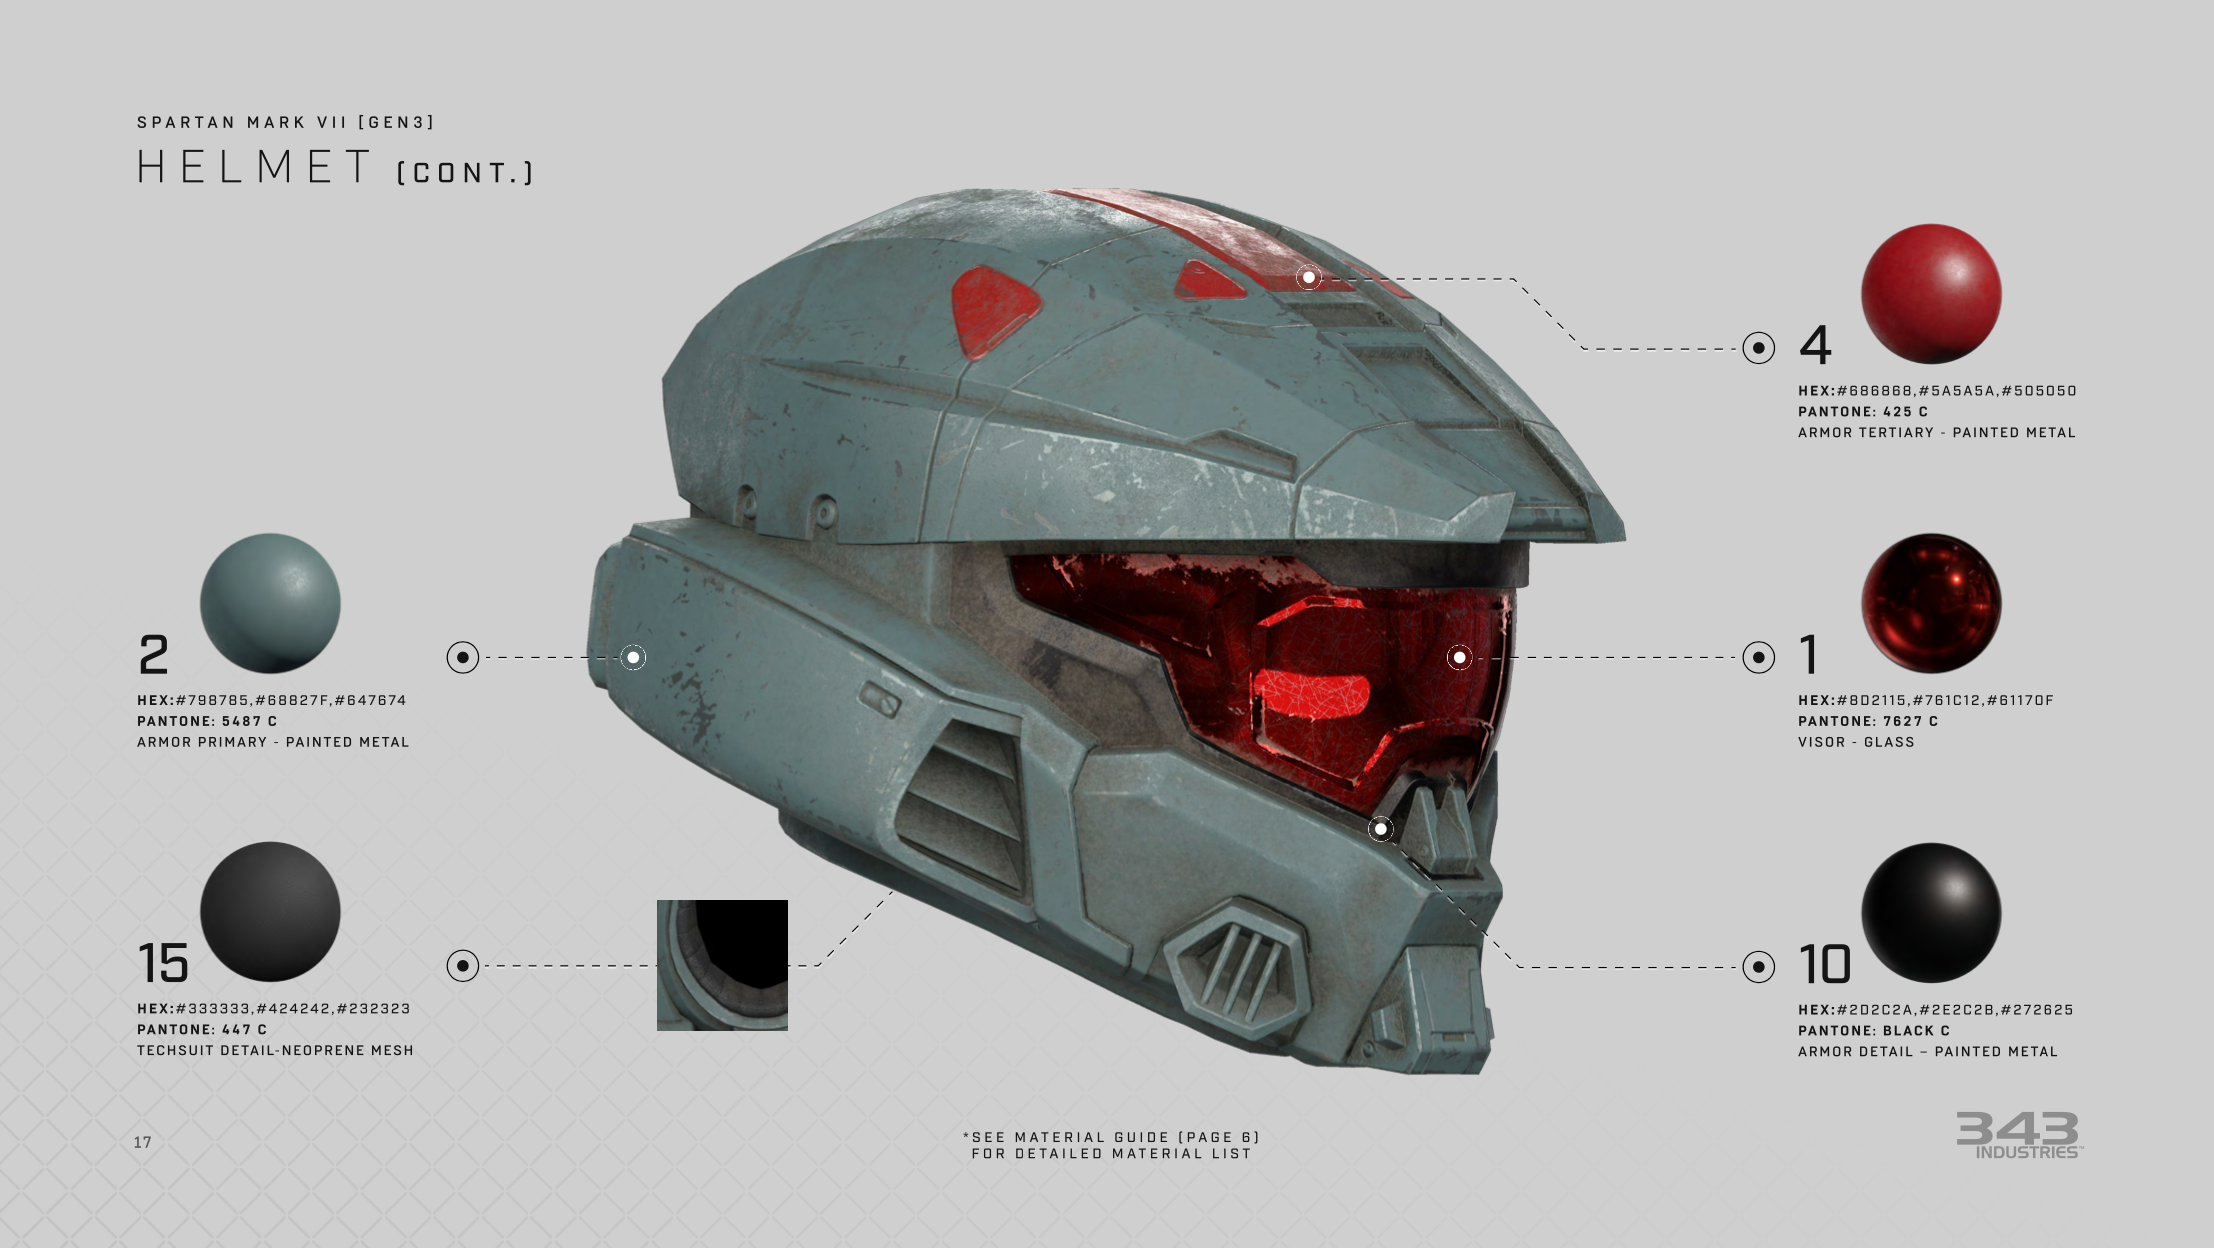 Helmet for the Spartan Mk. VII Gen 3 cosplay